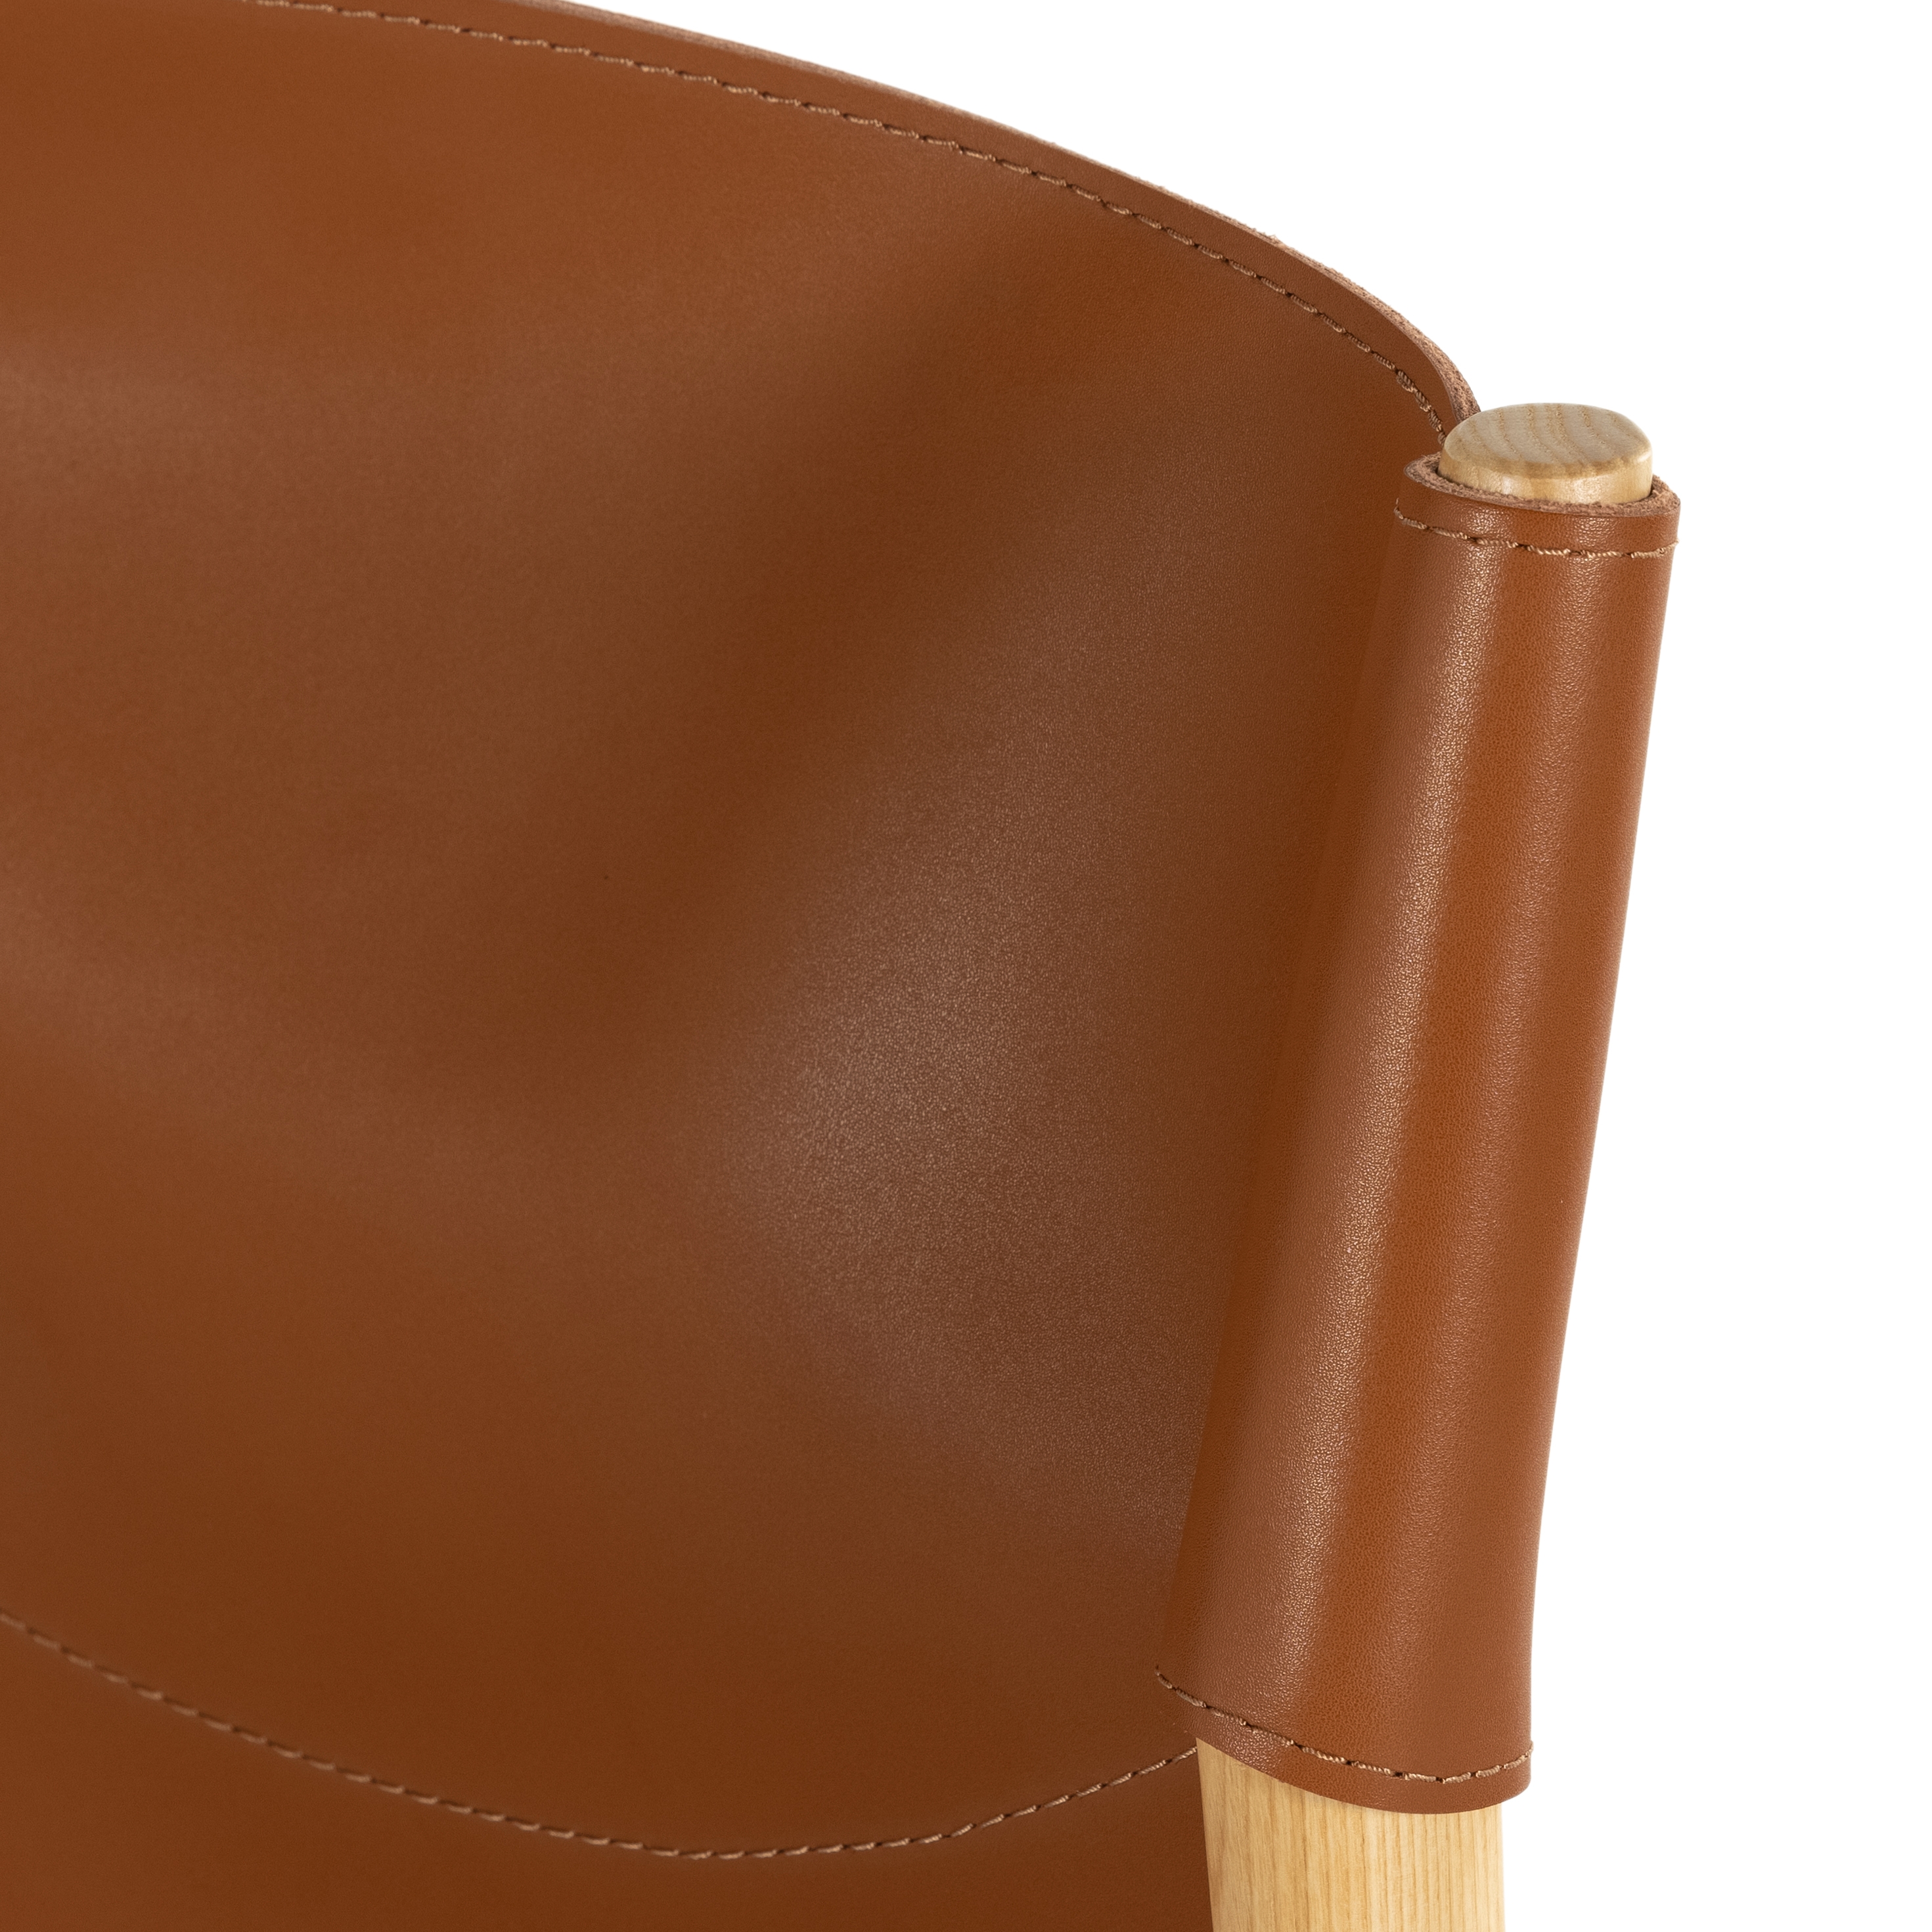 Lulu Armless Dining Chair-Saddle Leather - Image 9